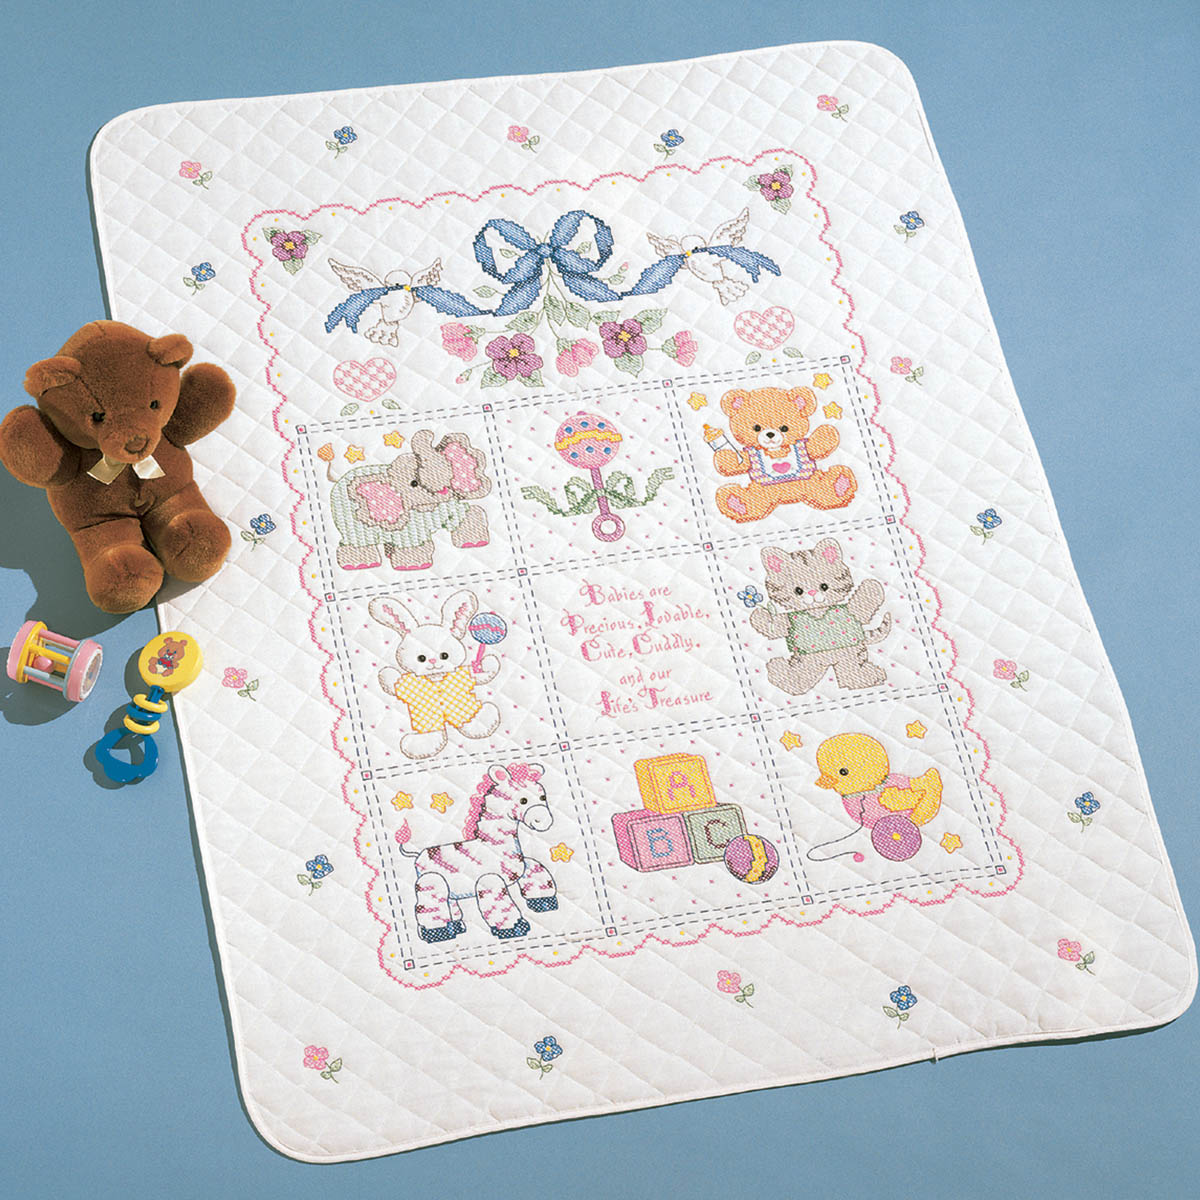 Bucilla ® Baby - Stamped Cross Stitch - Crib Ensembles - Babies Are Precious - Crib Cover Kit - 4078